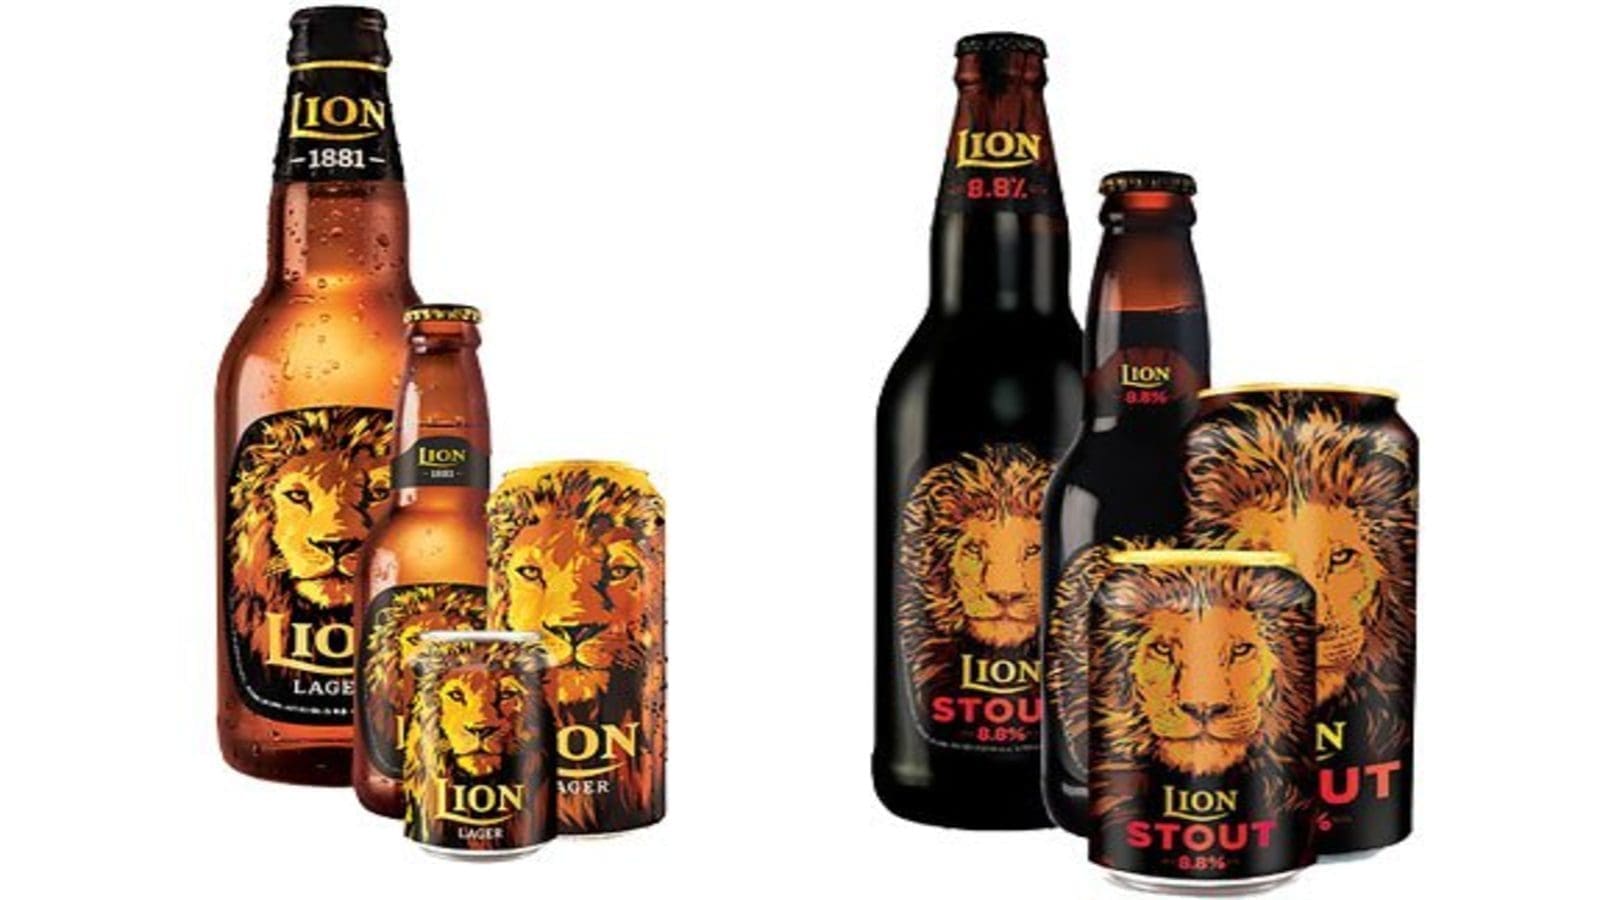 Lion Brewery posts 17 % rise in revenue in 2022 despite tough economic conditions